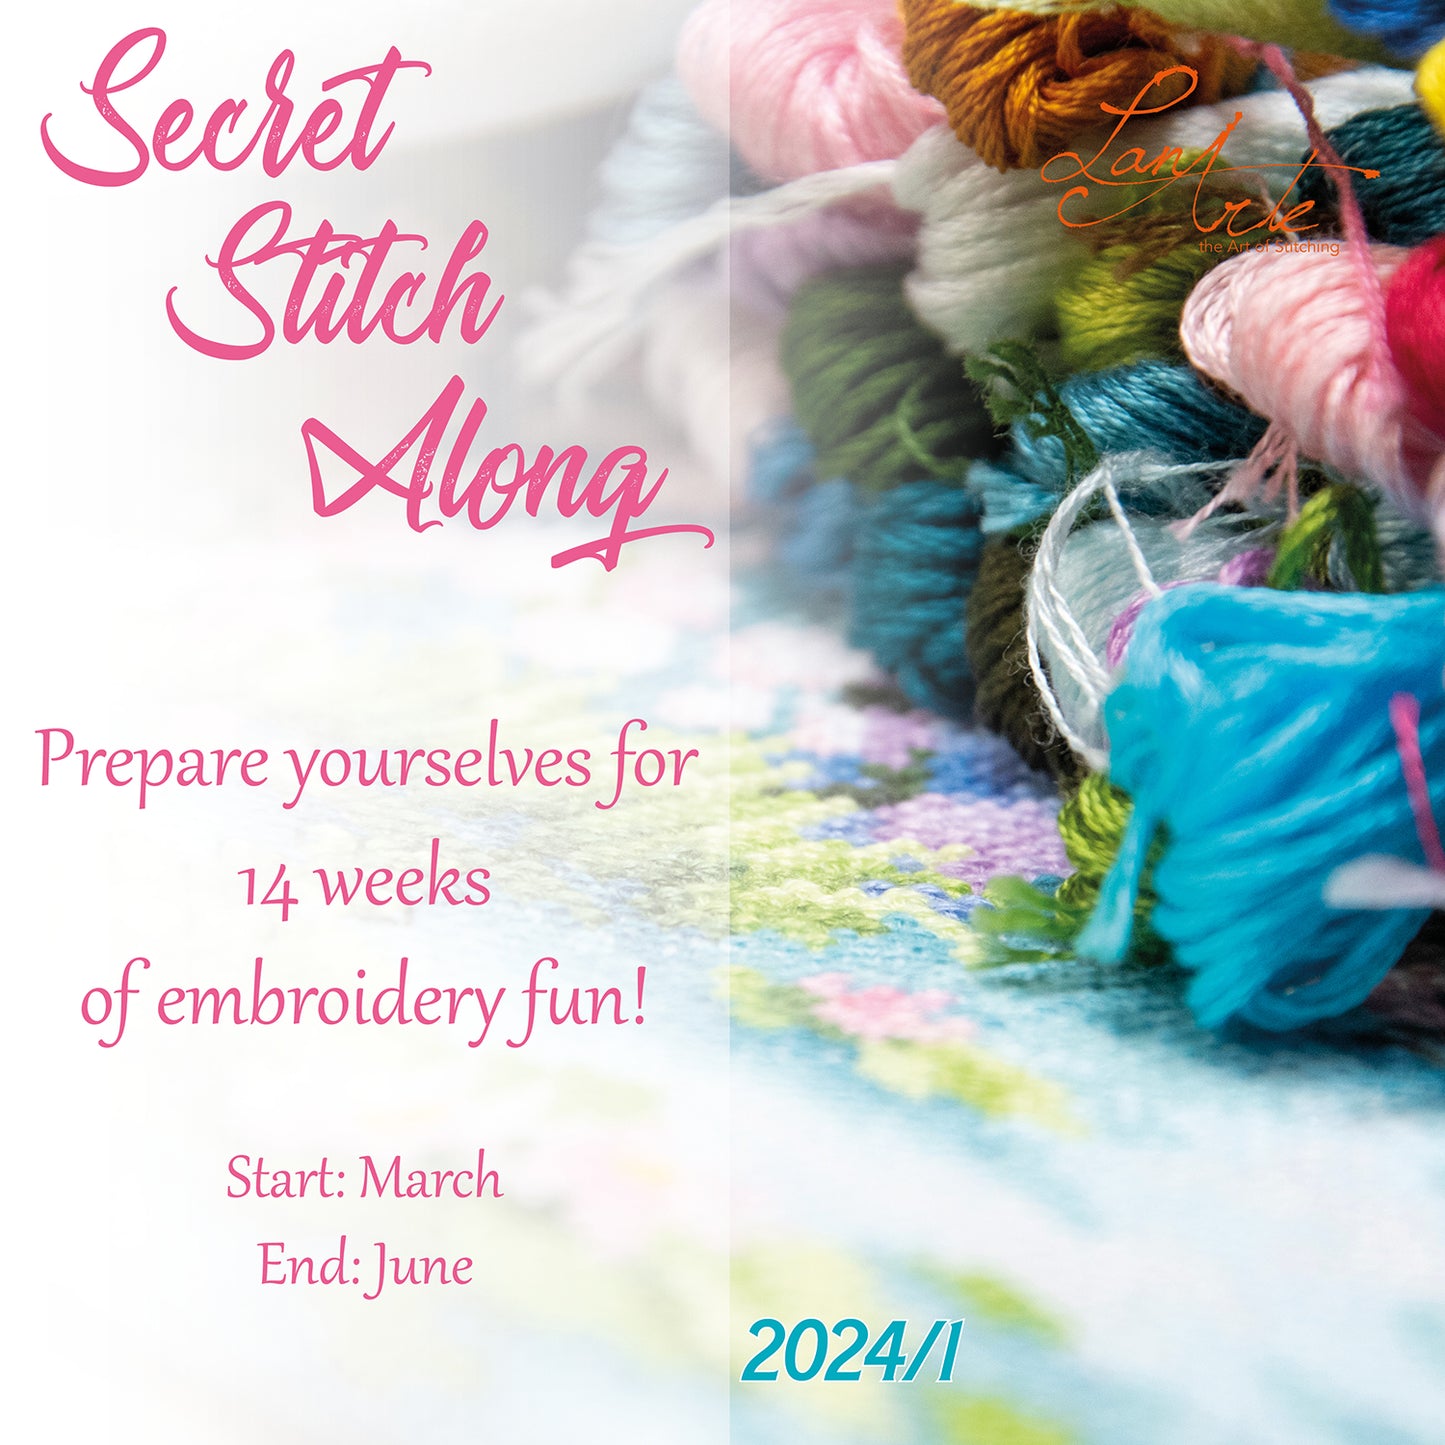 Secret Stitch A Long 2024/1